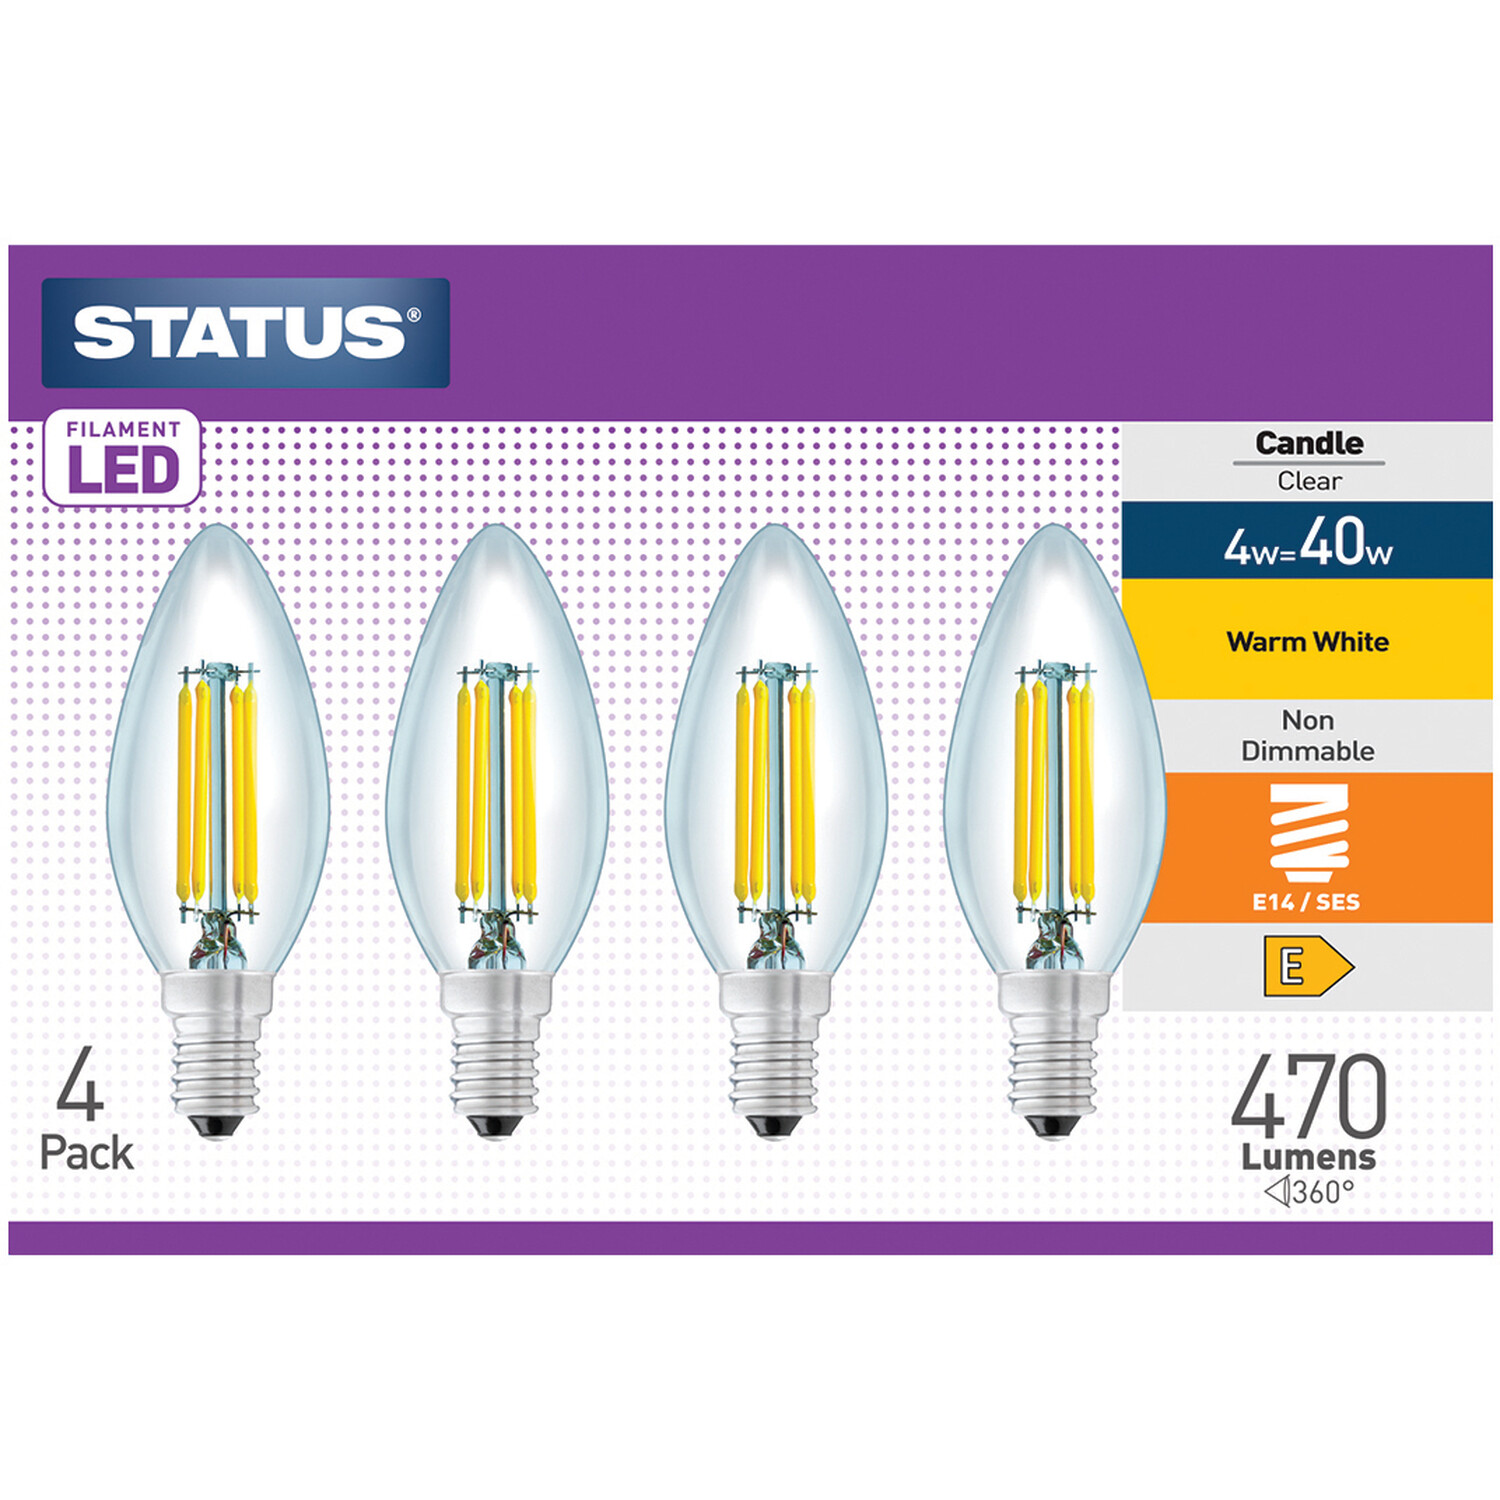 Status 4 Pack SES LED 470 Lumens Candle Light Bulb Image 1